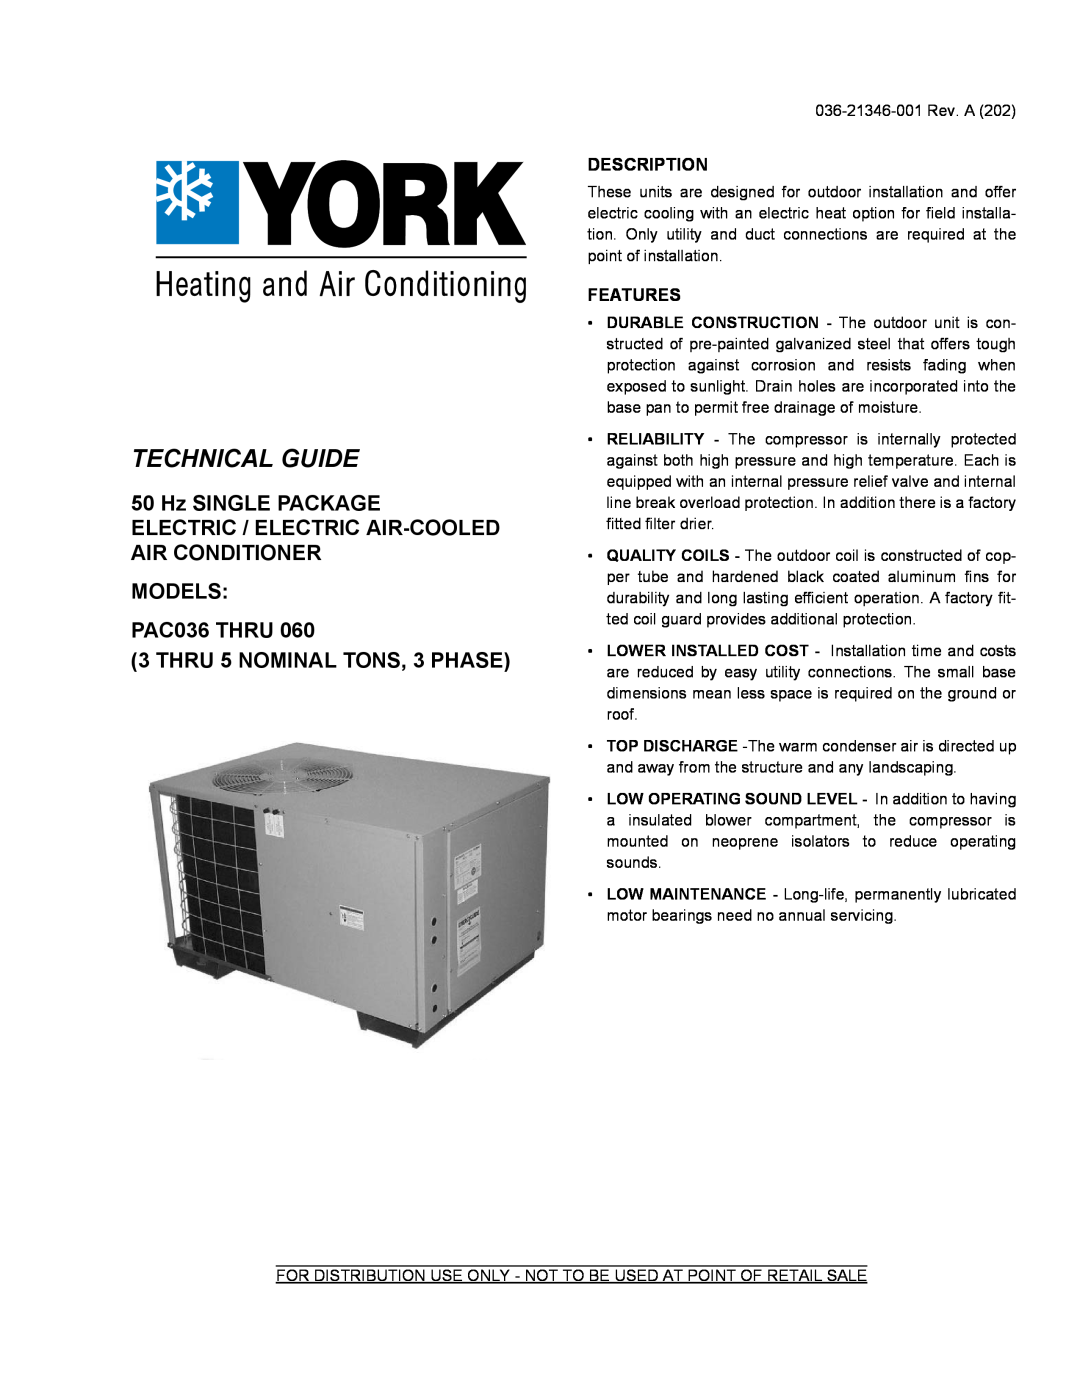 York PAC036 dimensions Description, Features, Technical Guide, Hz SINGLE PACKAGE 